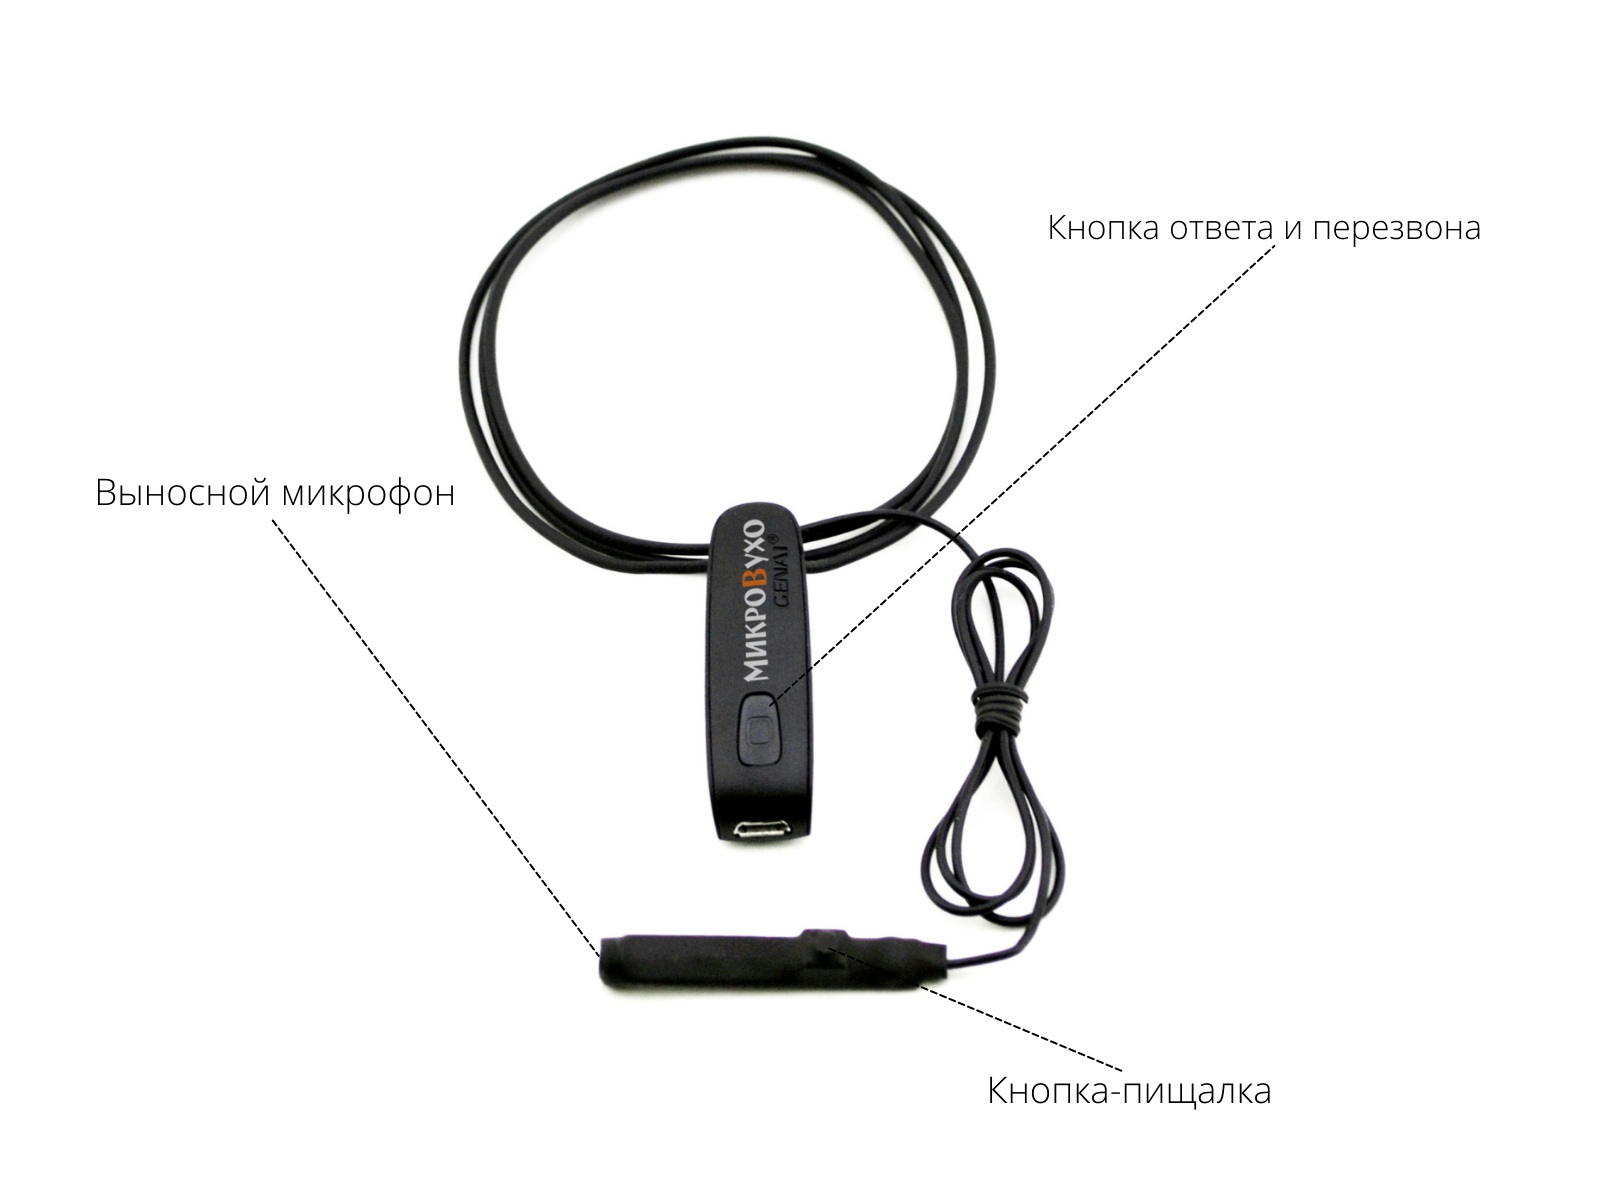 Bluetooth Basic с кнопкой-пищалкой, капсулой Premium и магнитами 2 мм 2